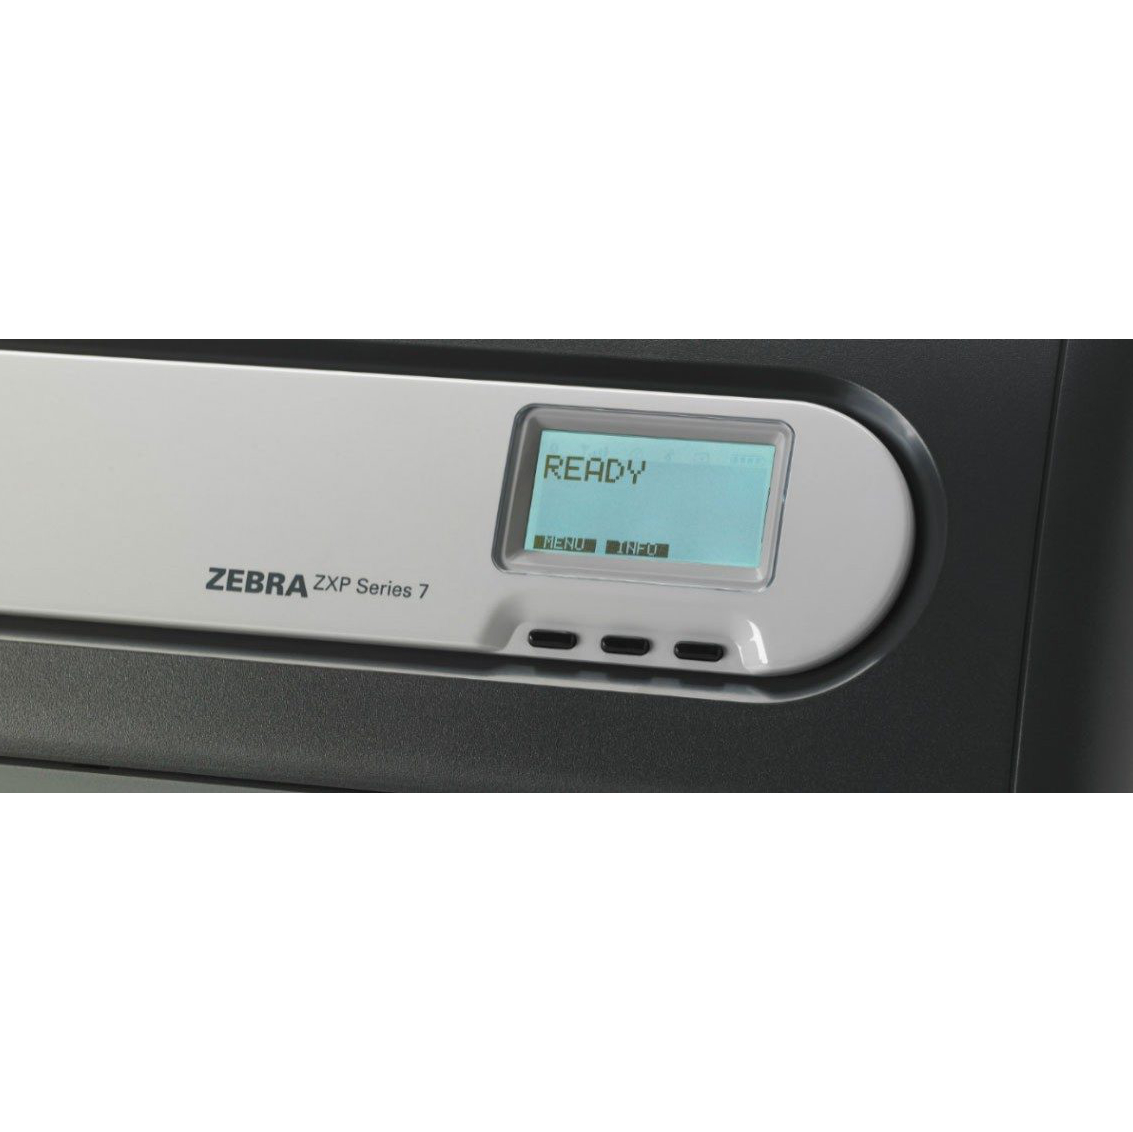 Zebra ZXP Series 7, Close-up of Display